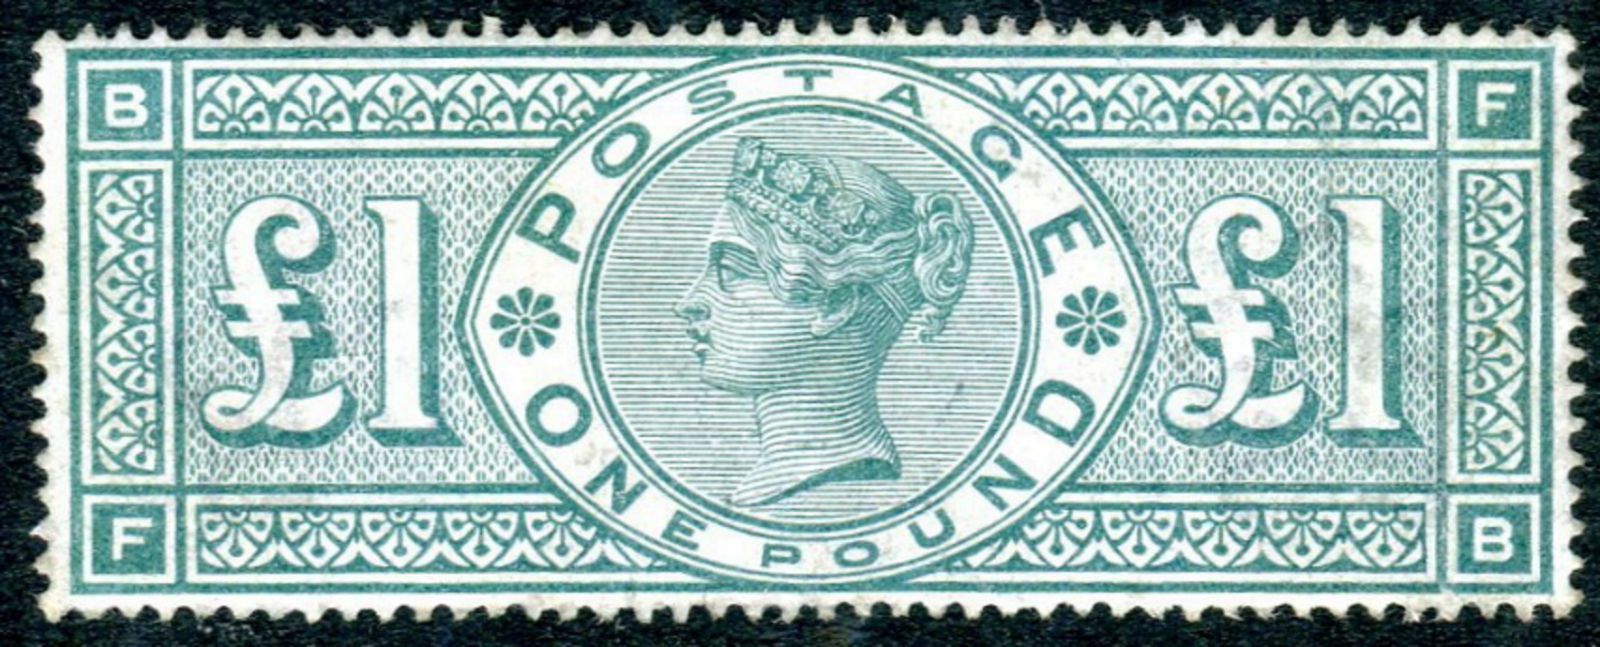 QV SG 212 1891 Jubilee 1 Green FB fine mint wellcentered High CV